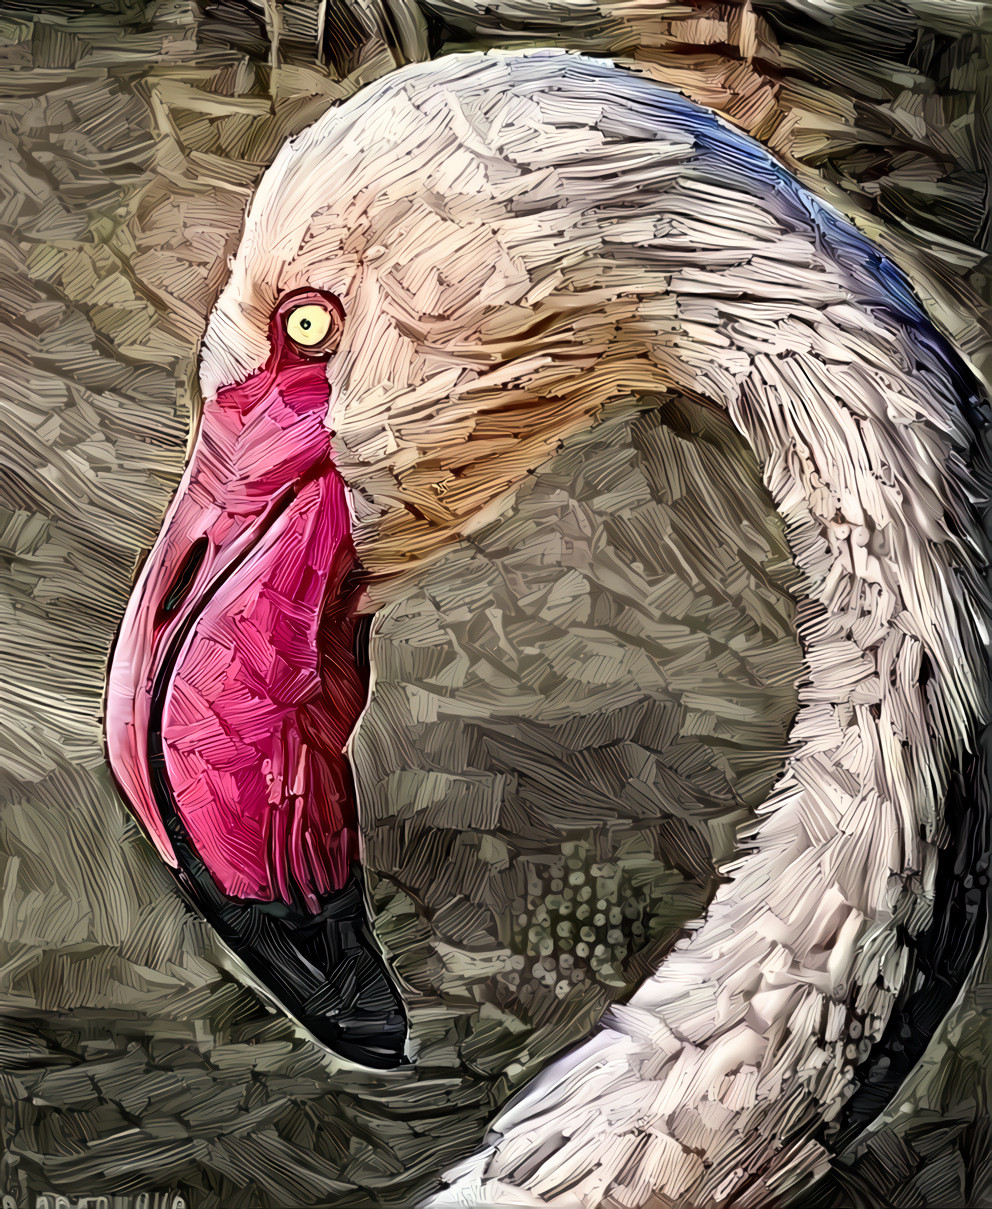 Tale of the rare Blue Rhodesian Ridgeback Flamingo. image courtesy of Doris Paashaus.